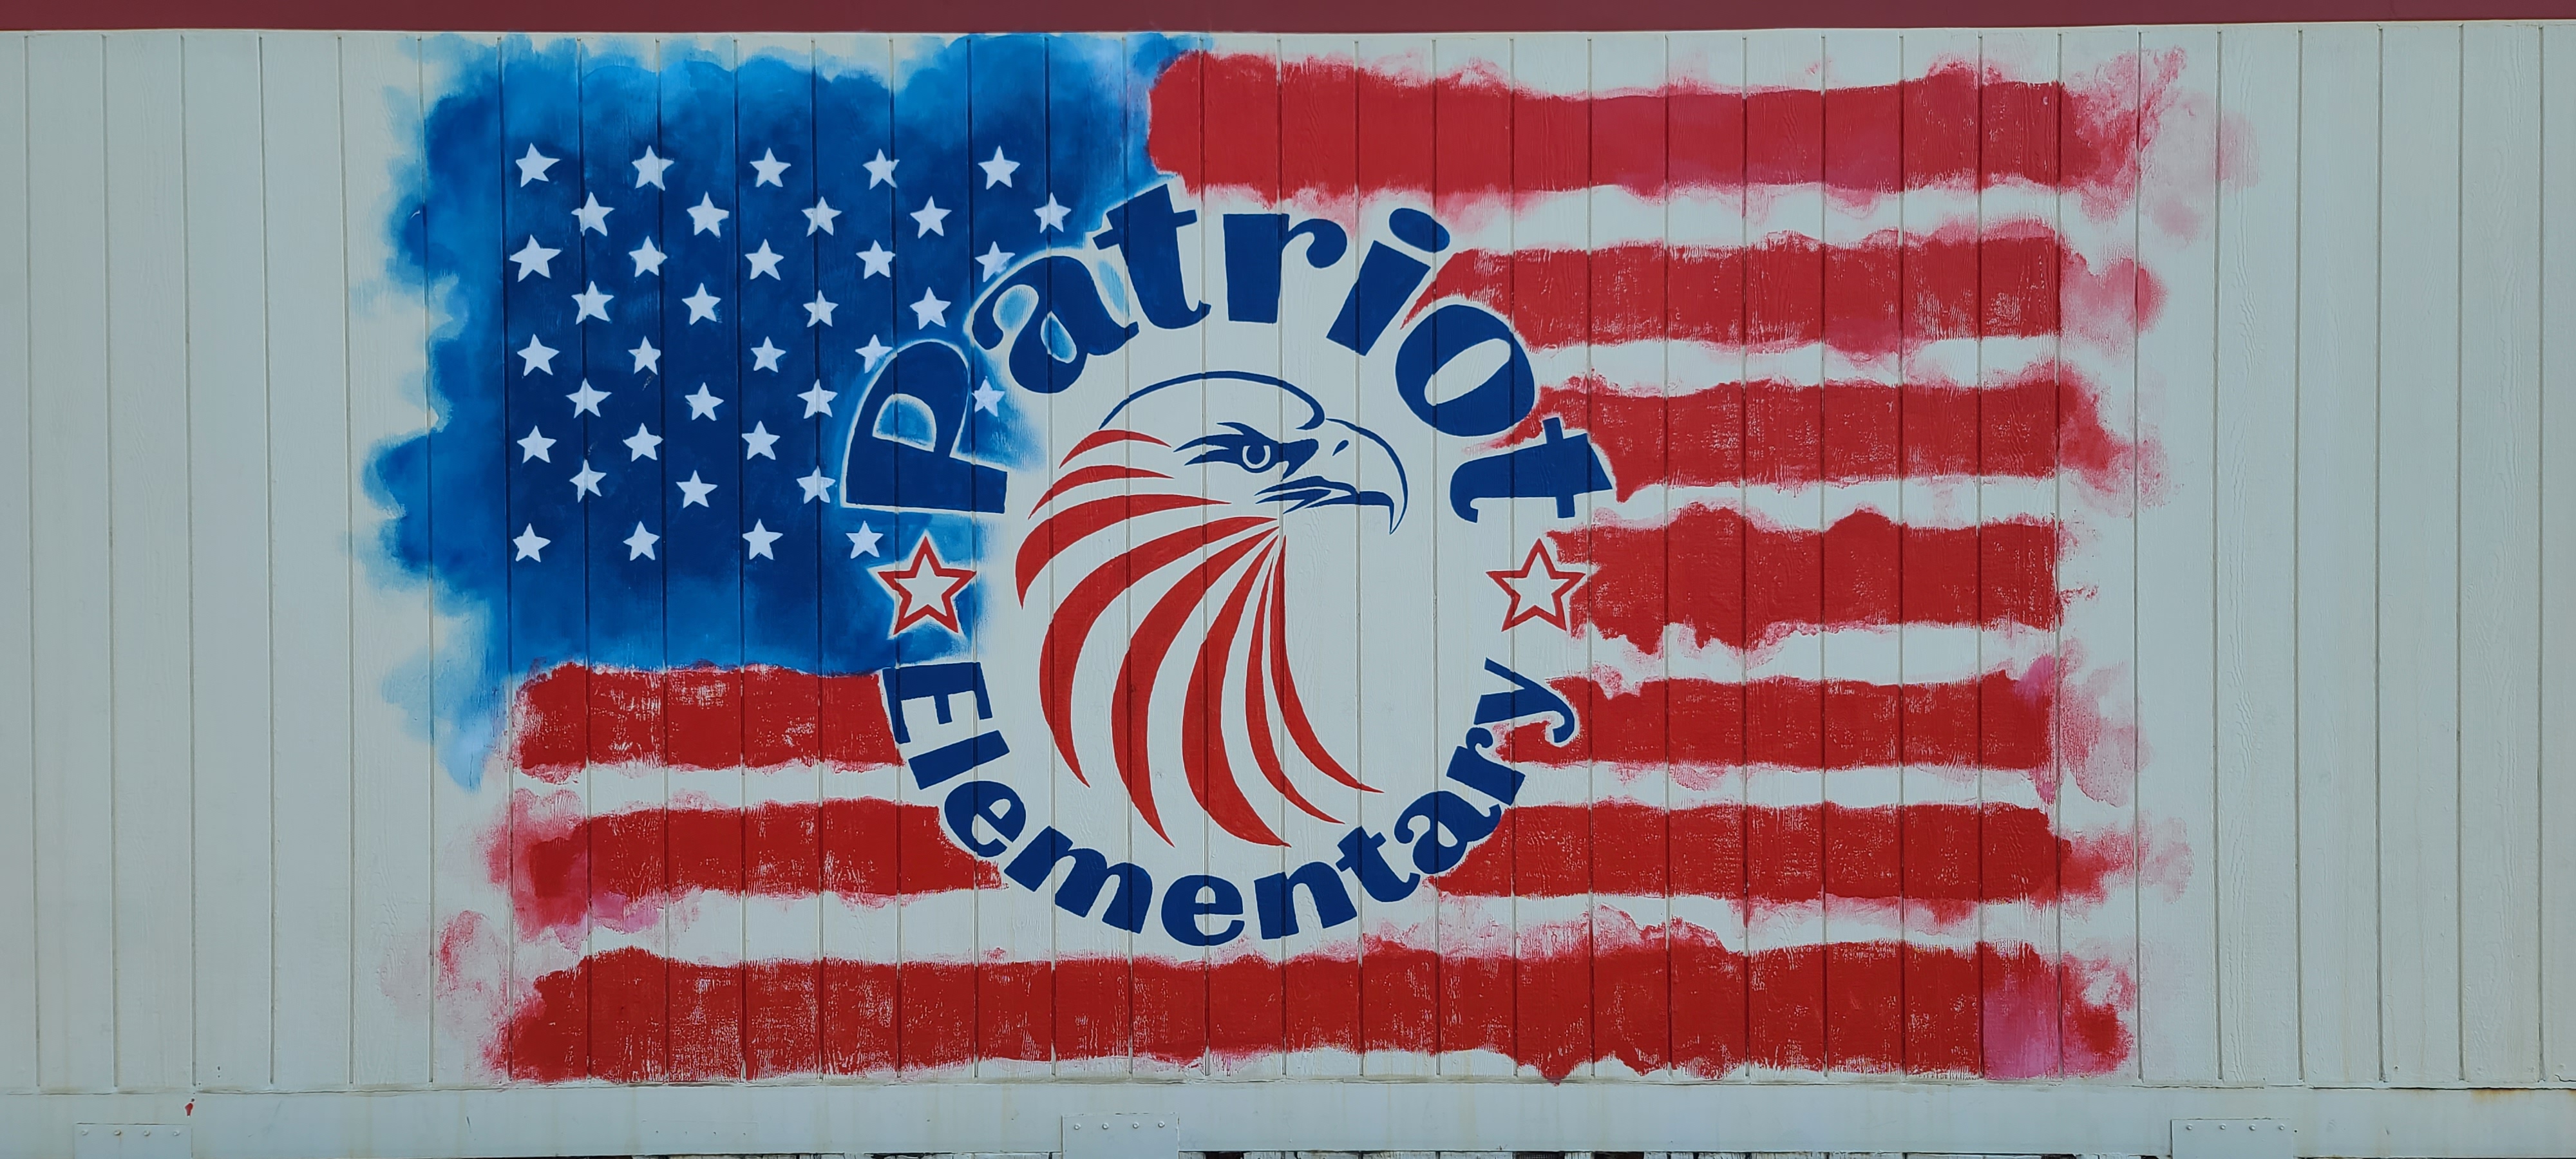 Patriot Elementary Logo